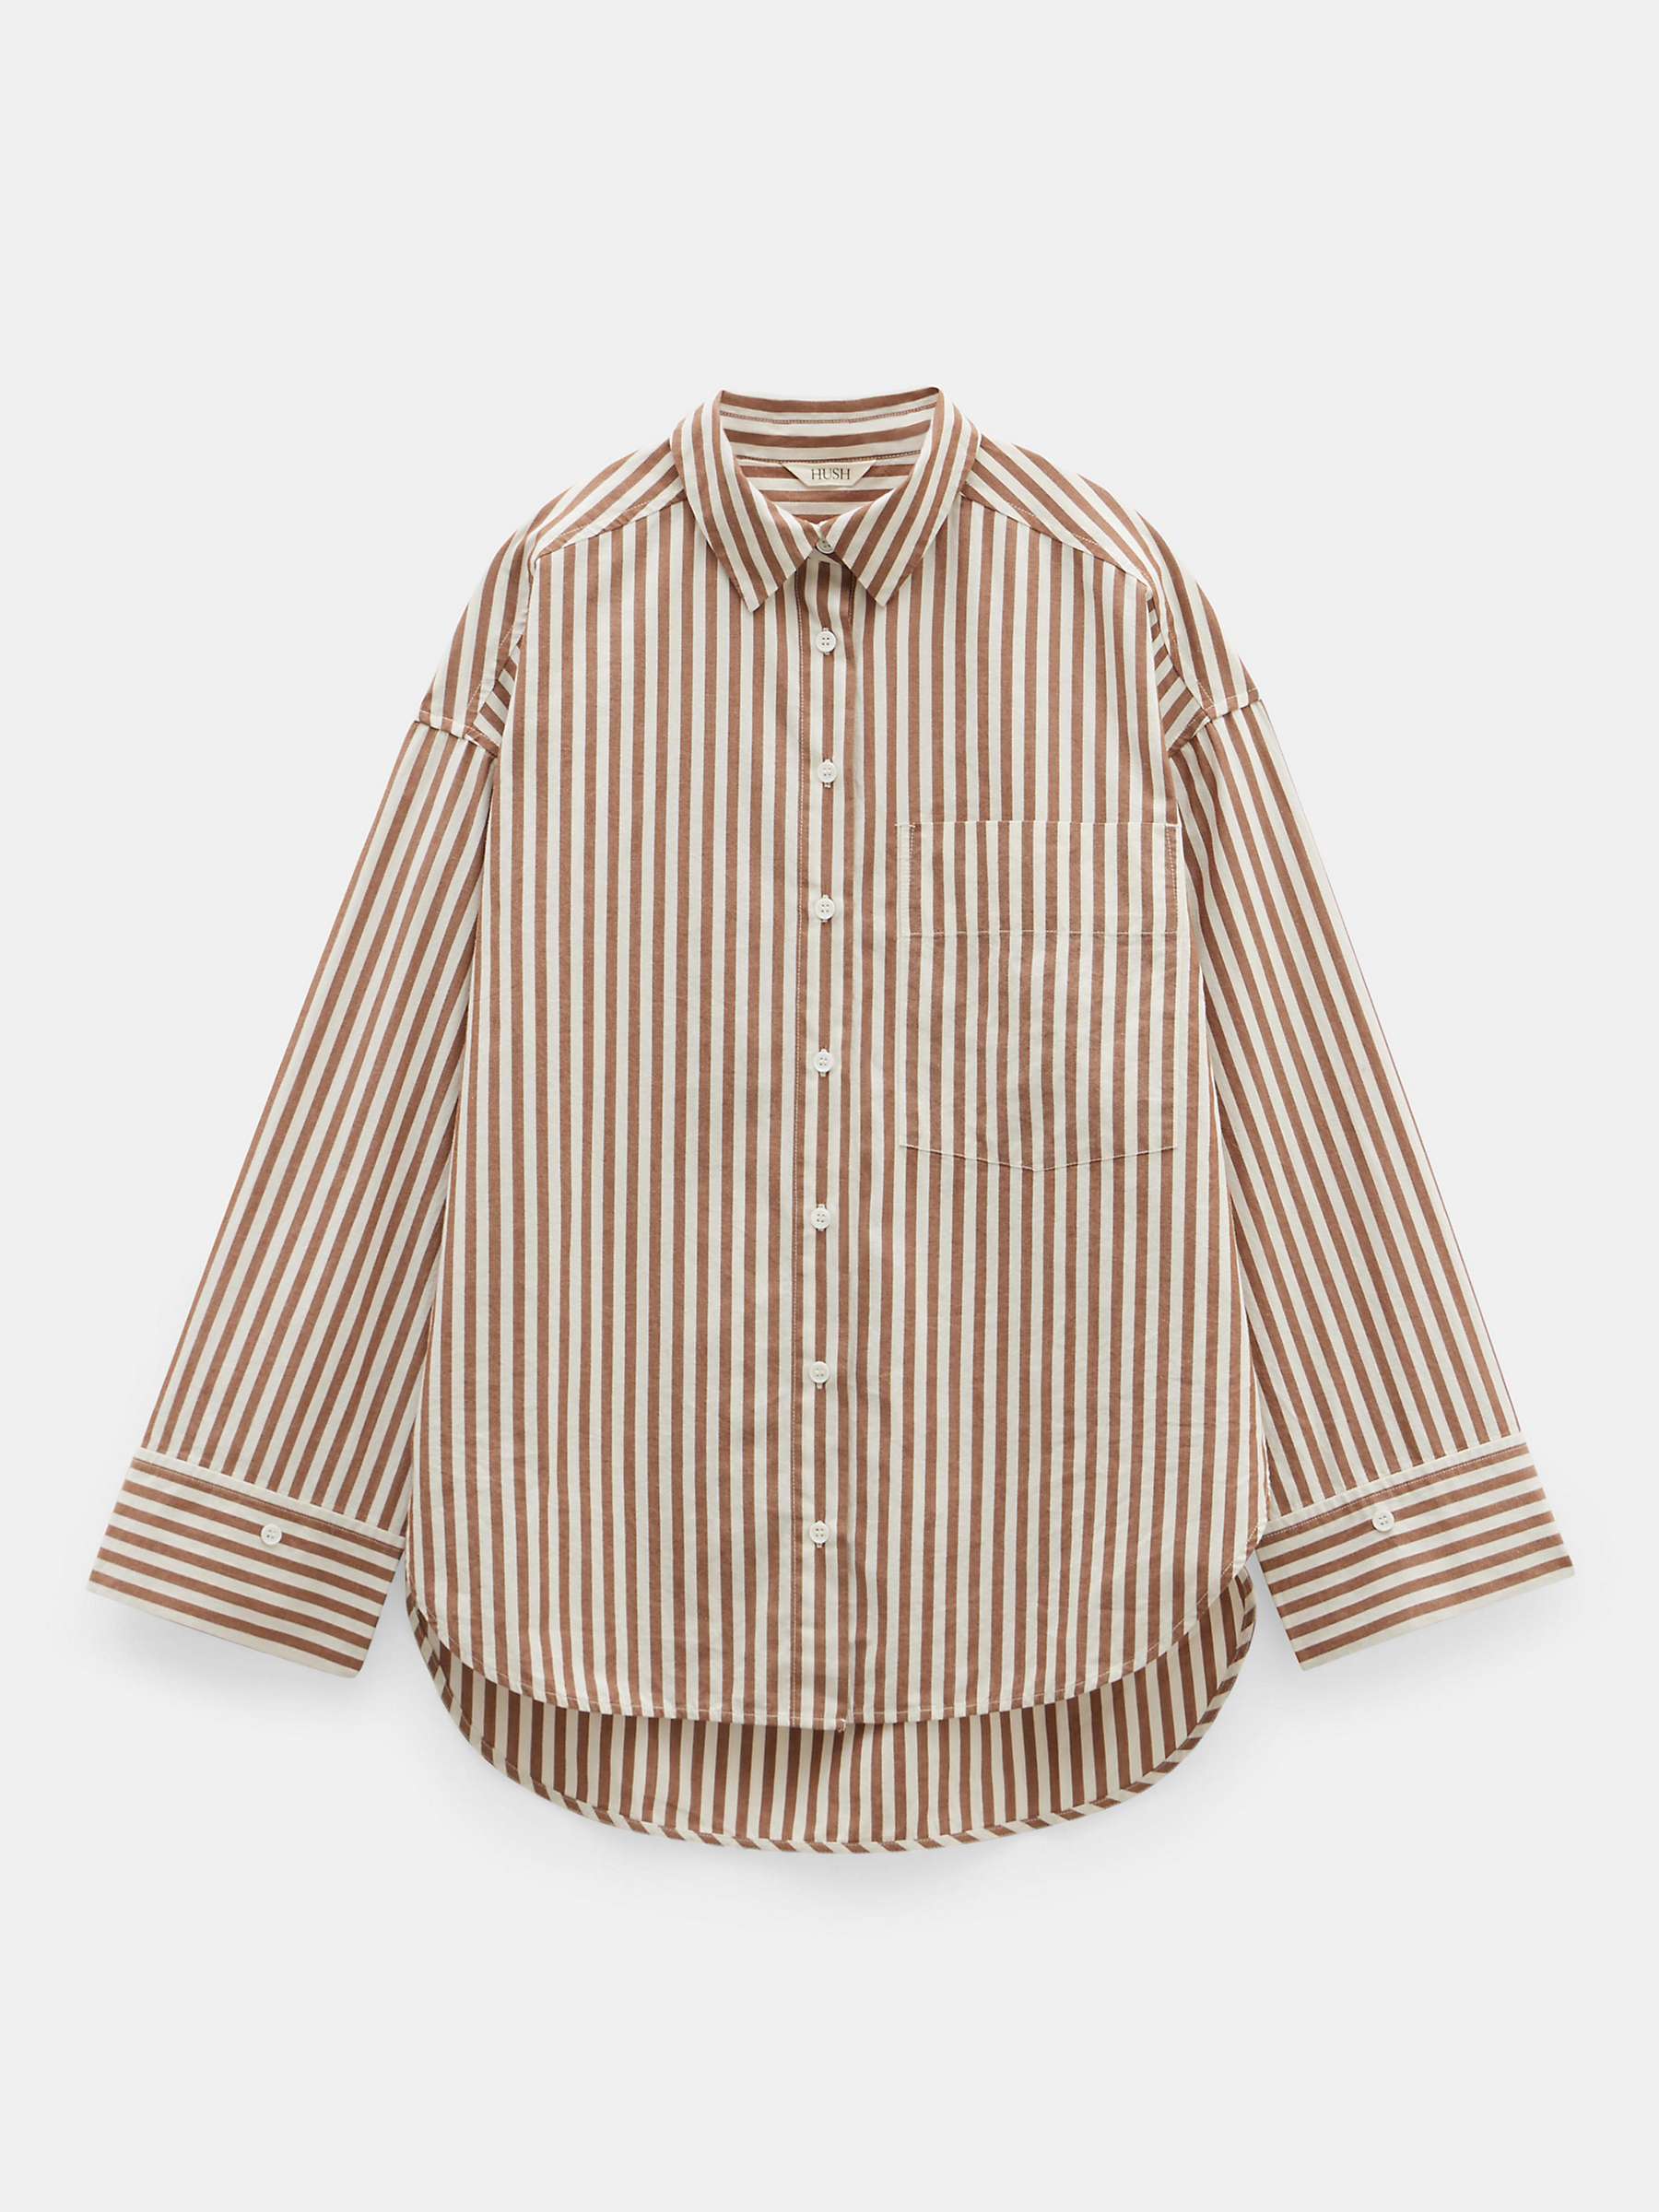 Buy HUSH Indy Stripe Shirt, Brown/White Online at johnlewis.com